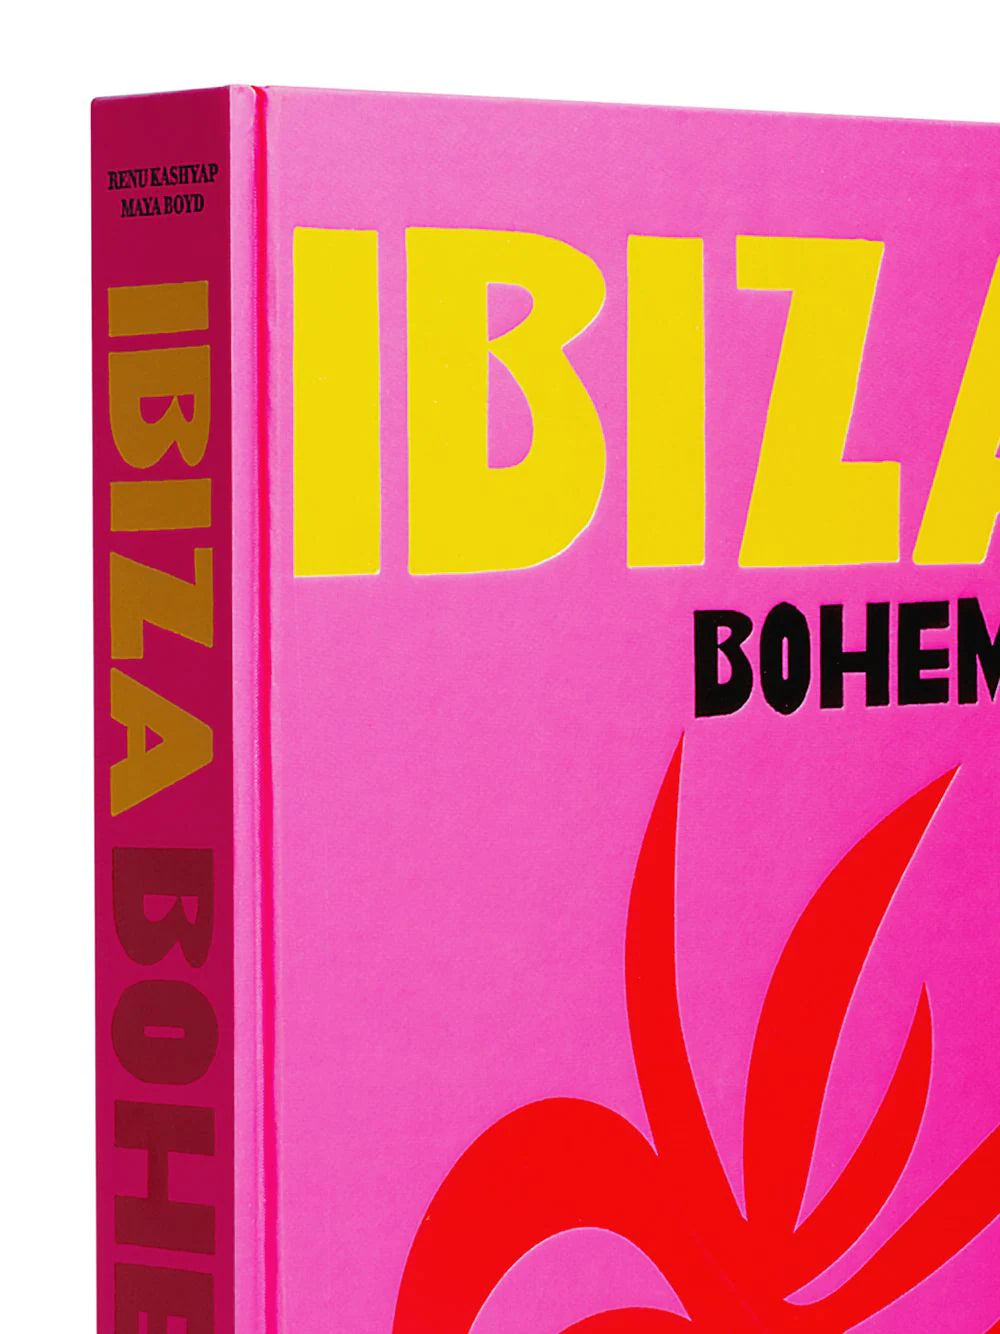 IBIZA BOHEMIA BOOK - $95